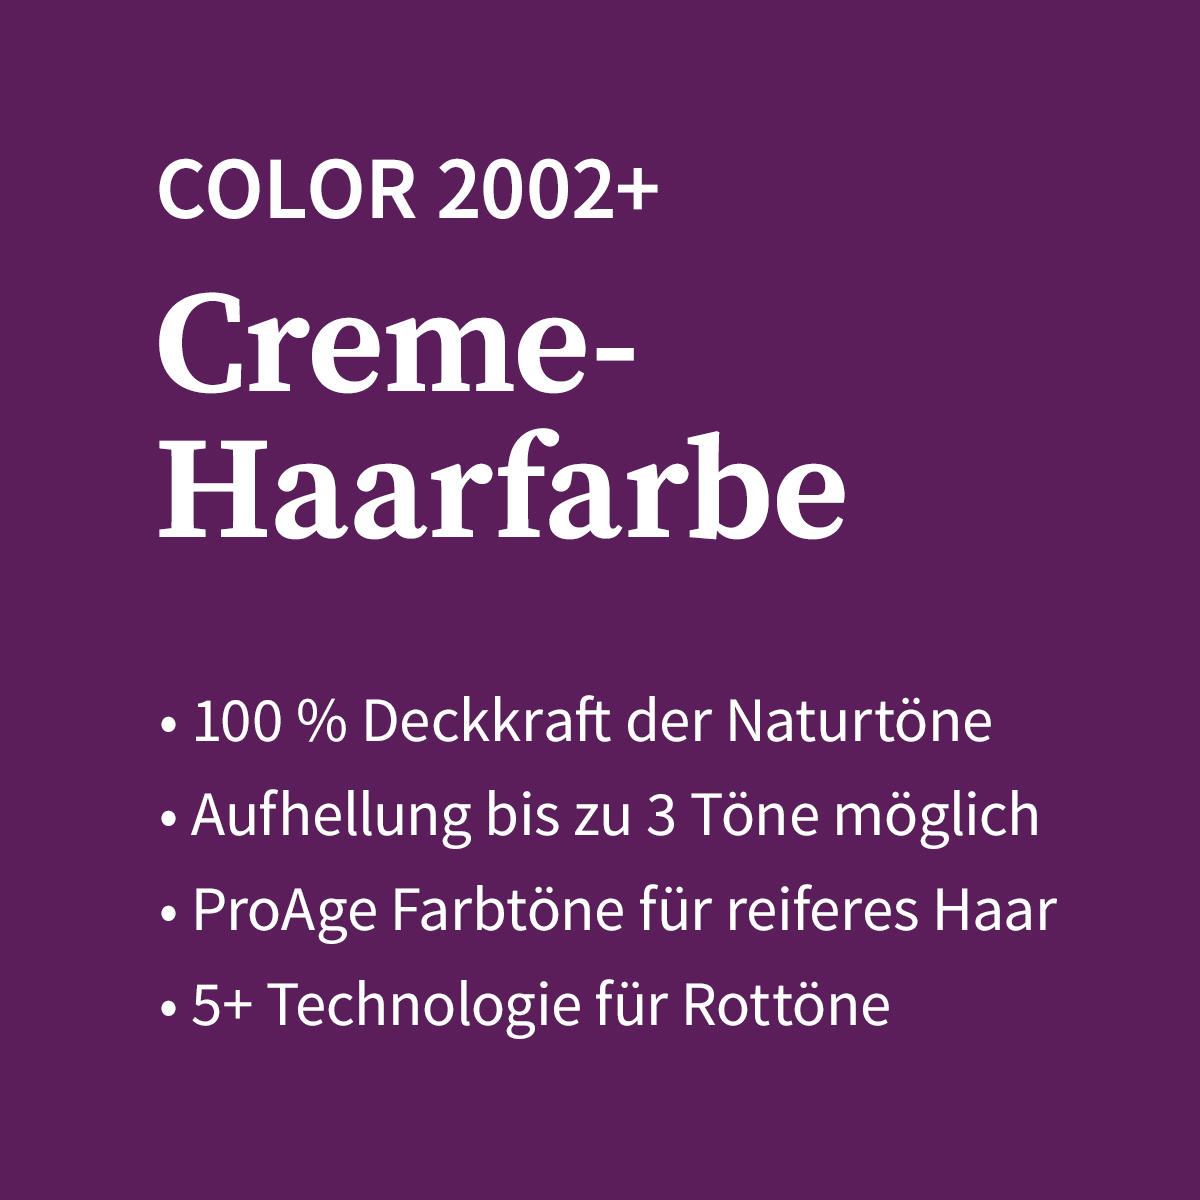 Basler Color 2002+ Cremehaarfarbe 10/i lichtblond intensiv, Tube 60 ml - 4